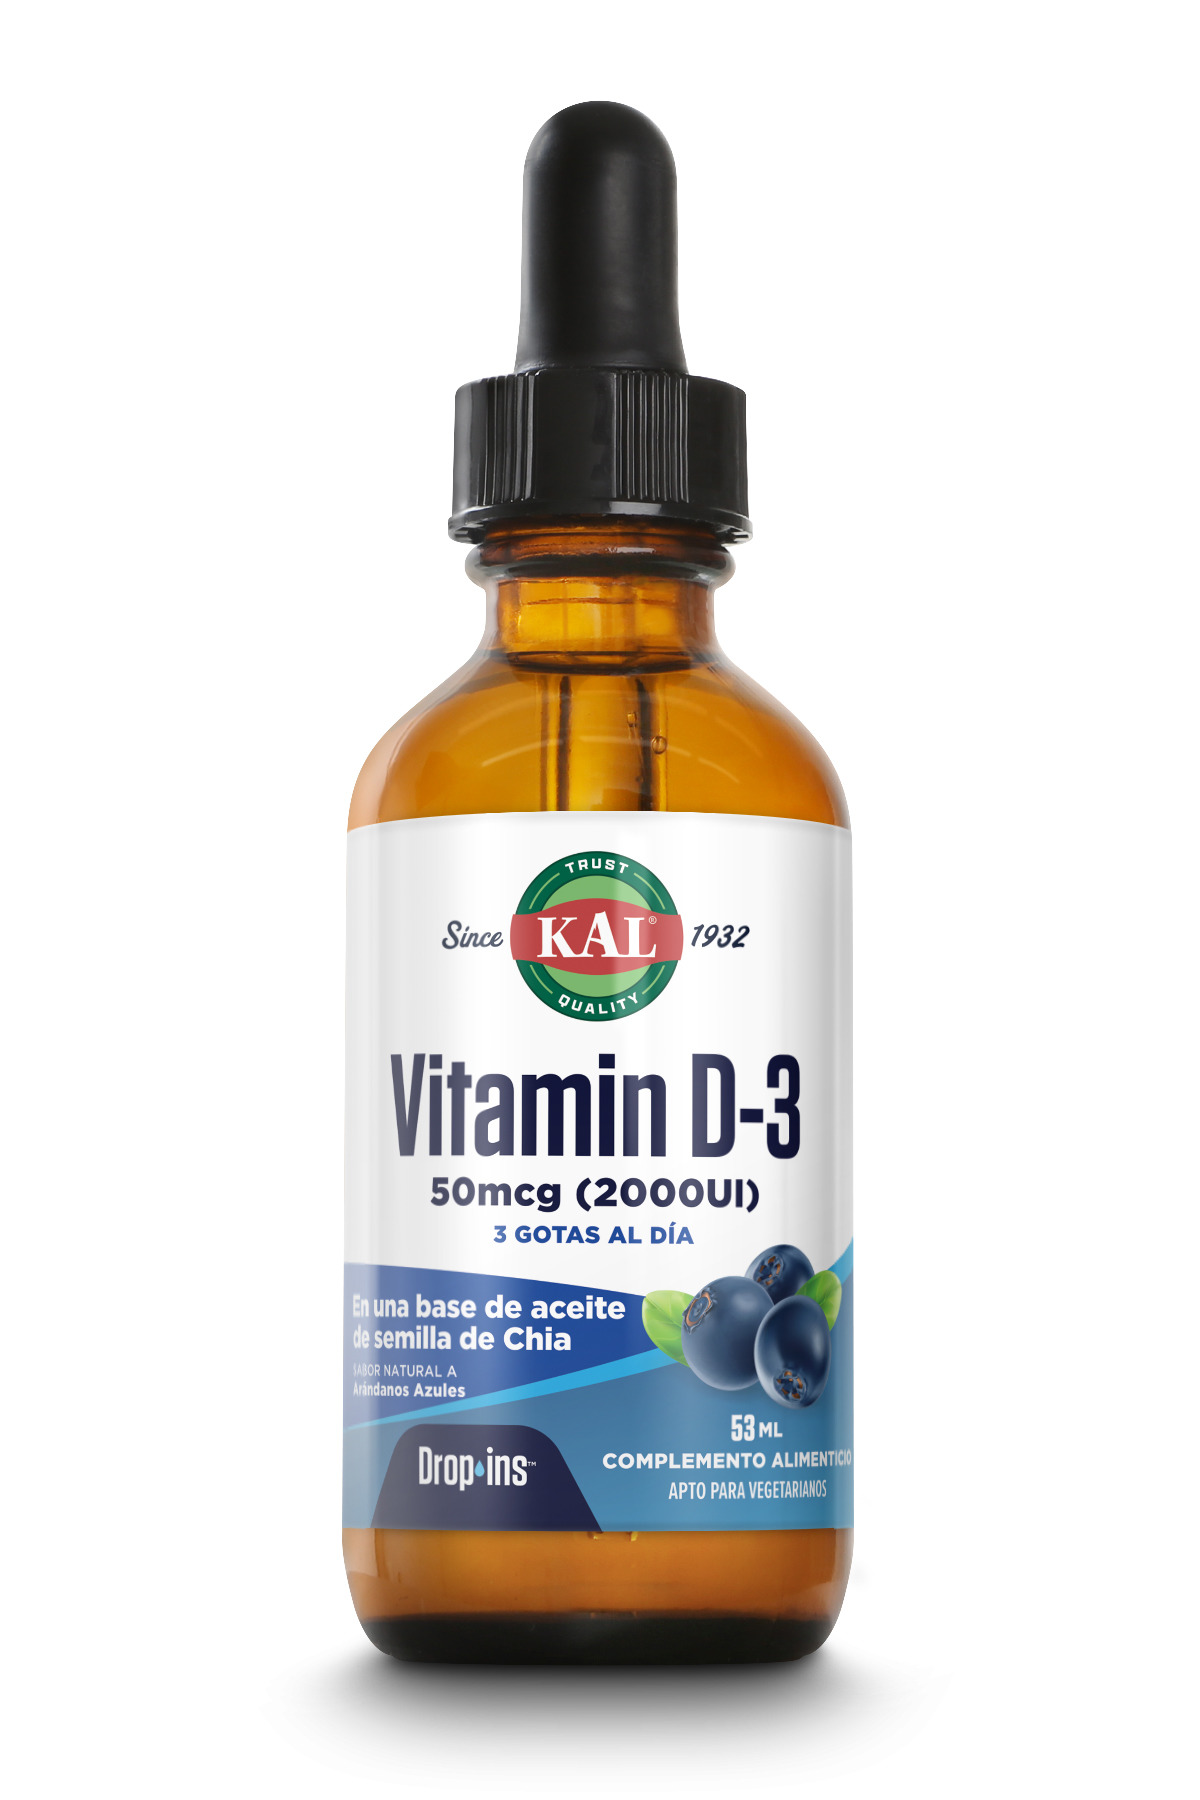 Vitamin D3 Kal